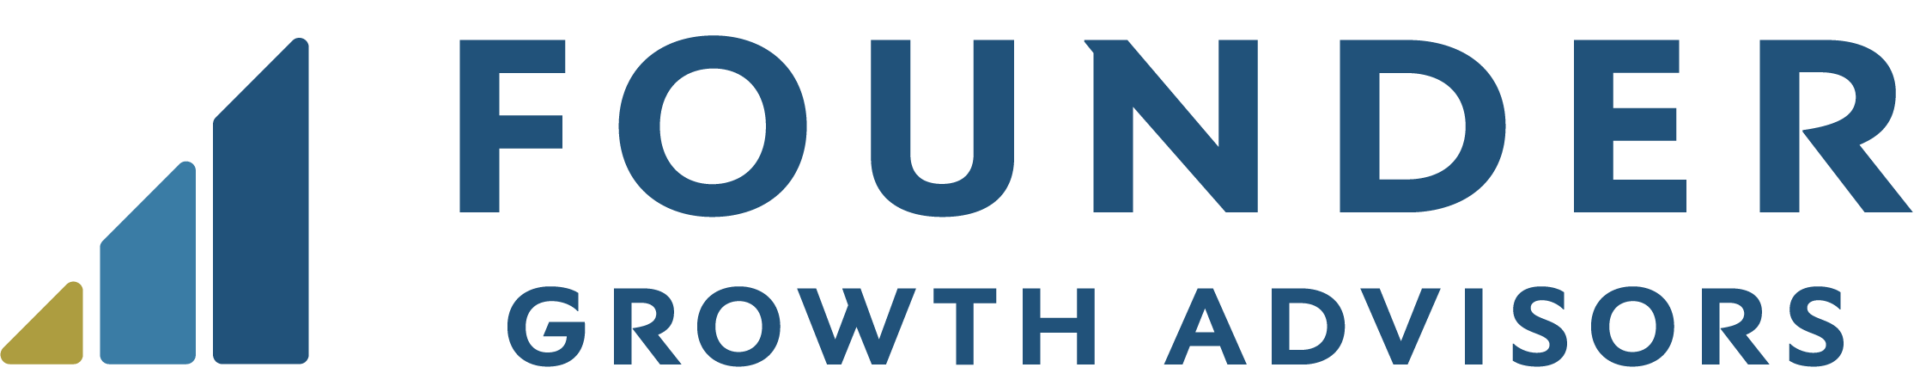 founder growth advisors logo